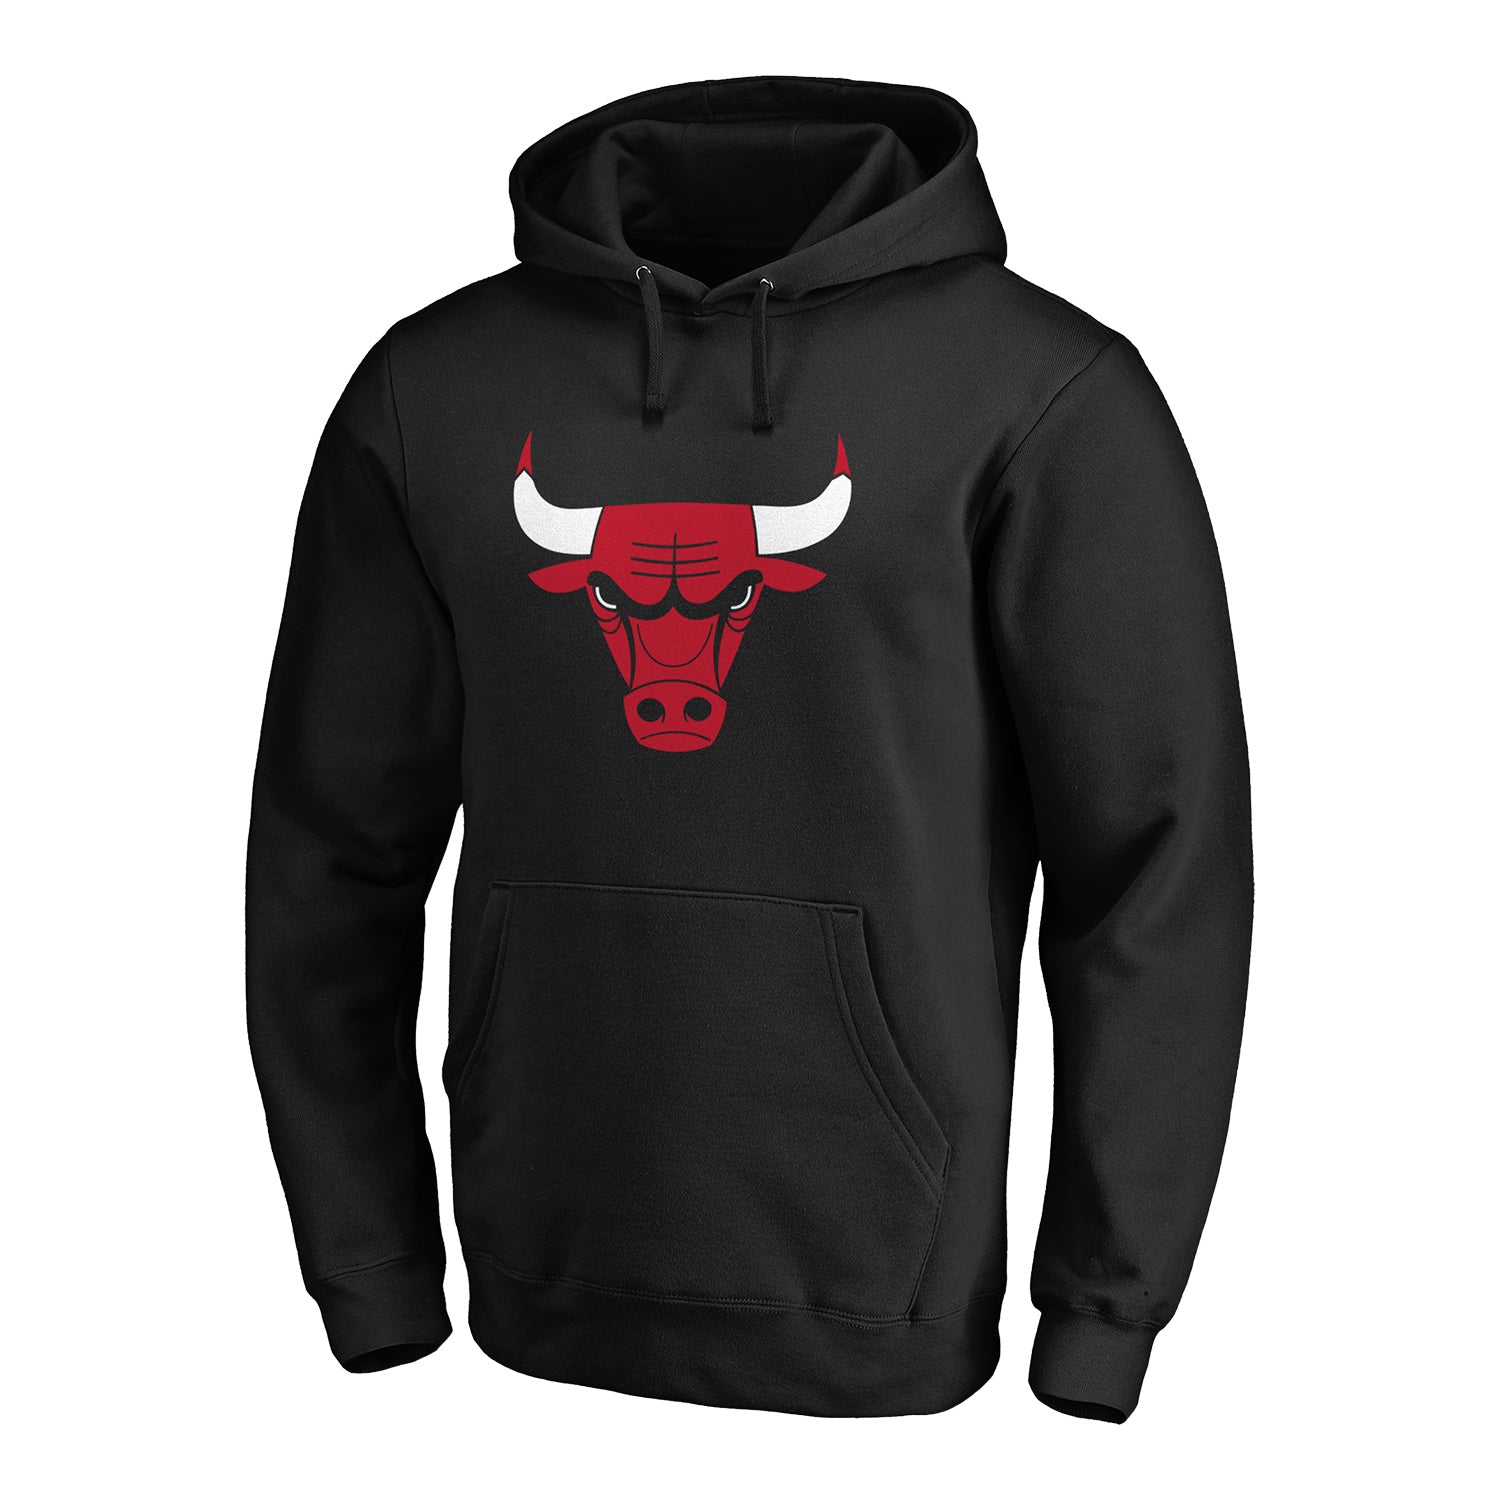 Fanatics, Shirts, New Chicago Bulls Zach Lavine Jersey